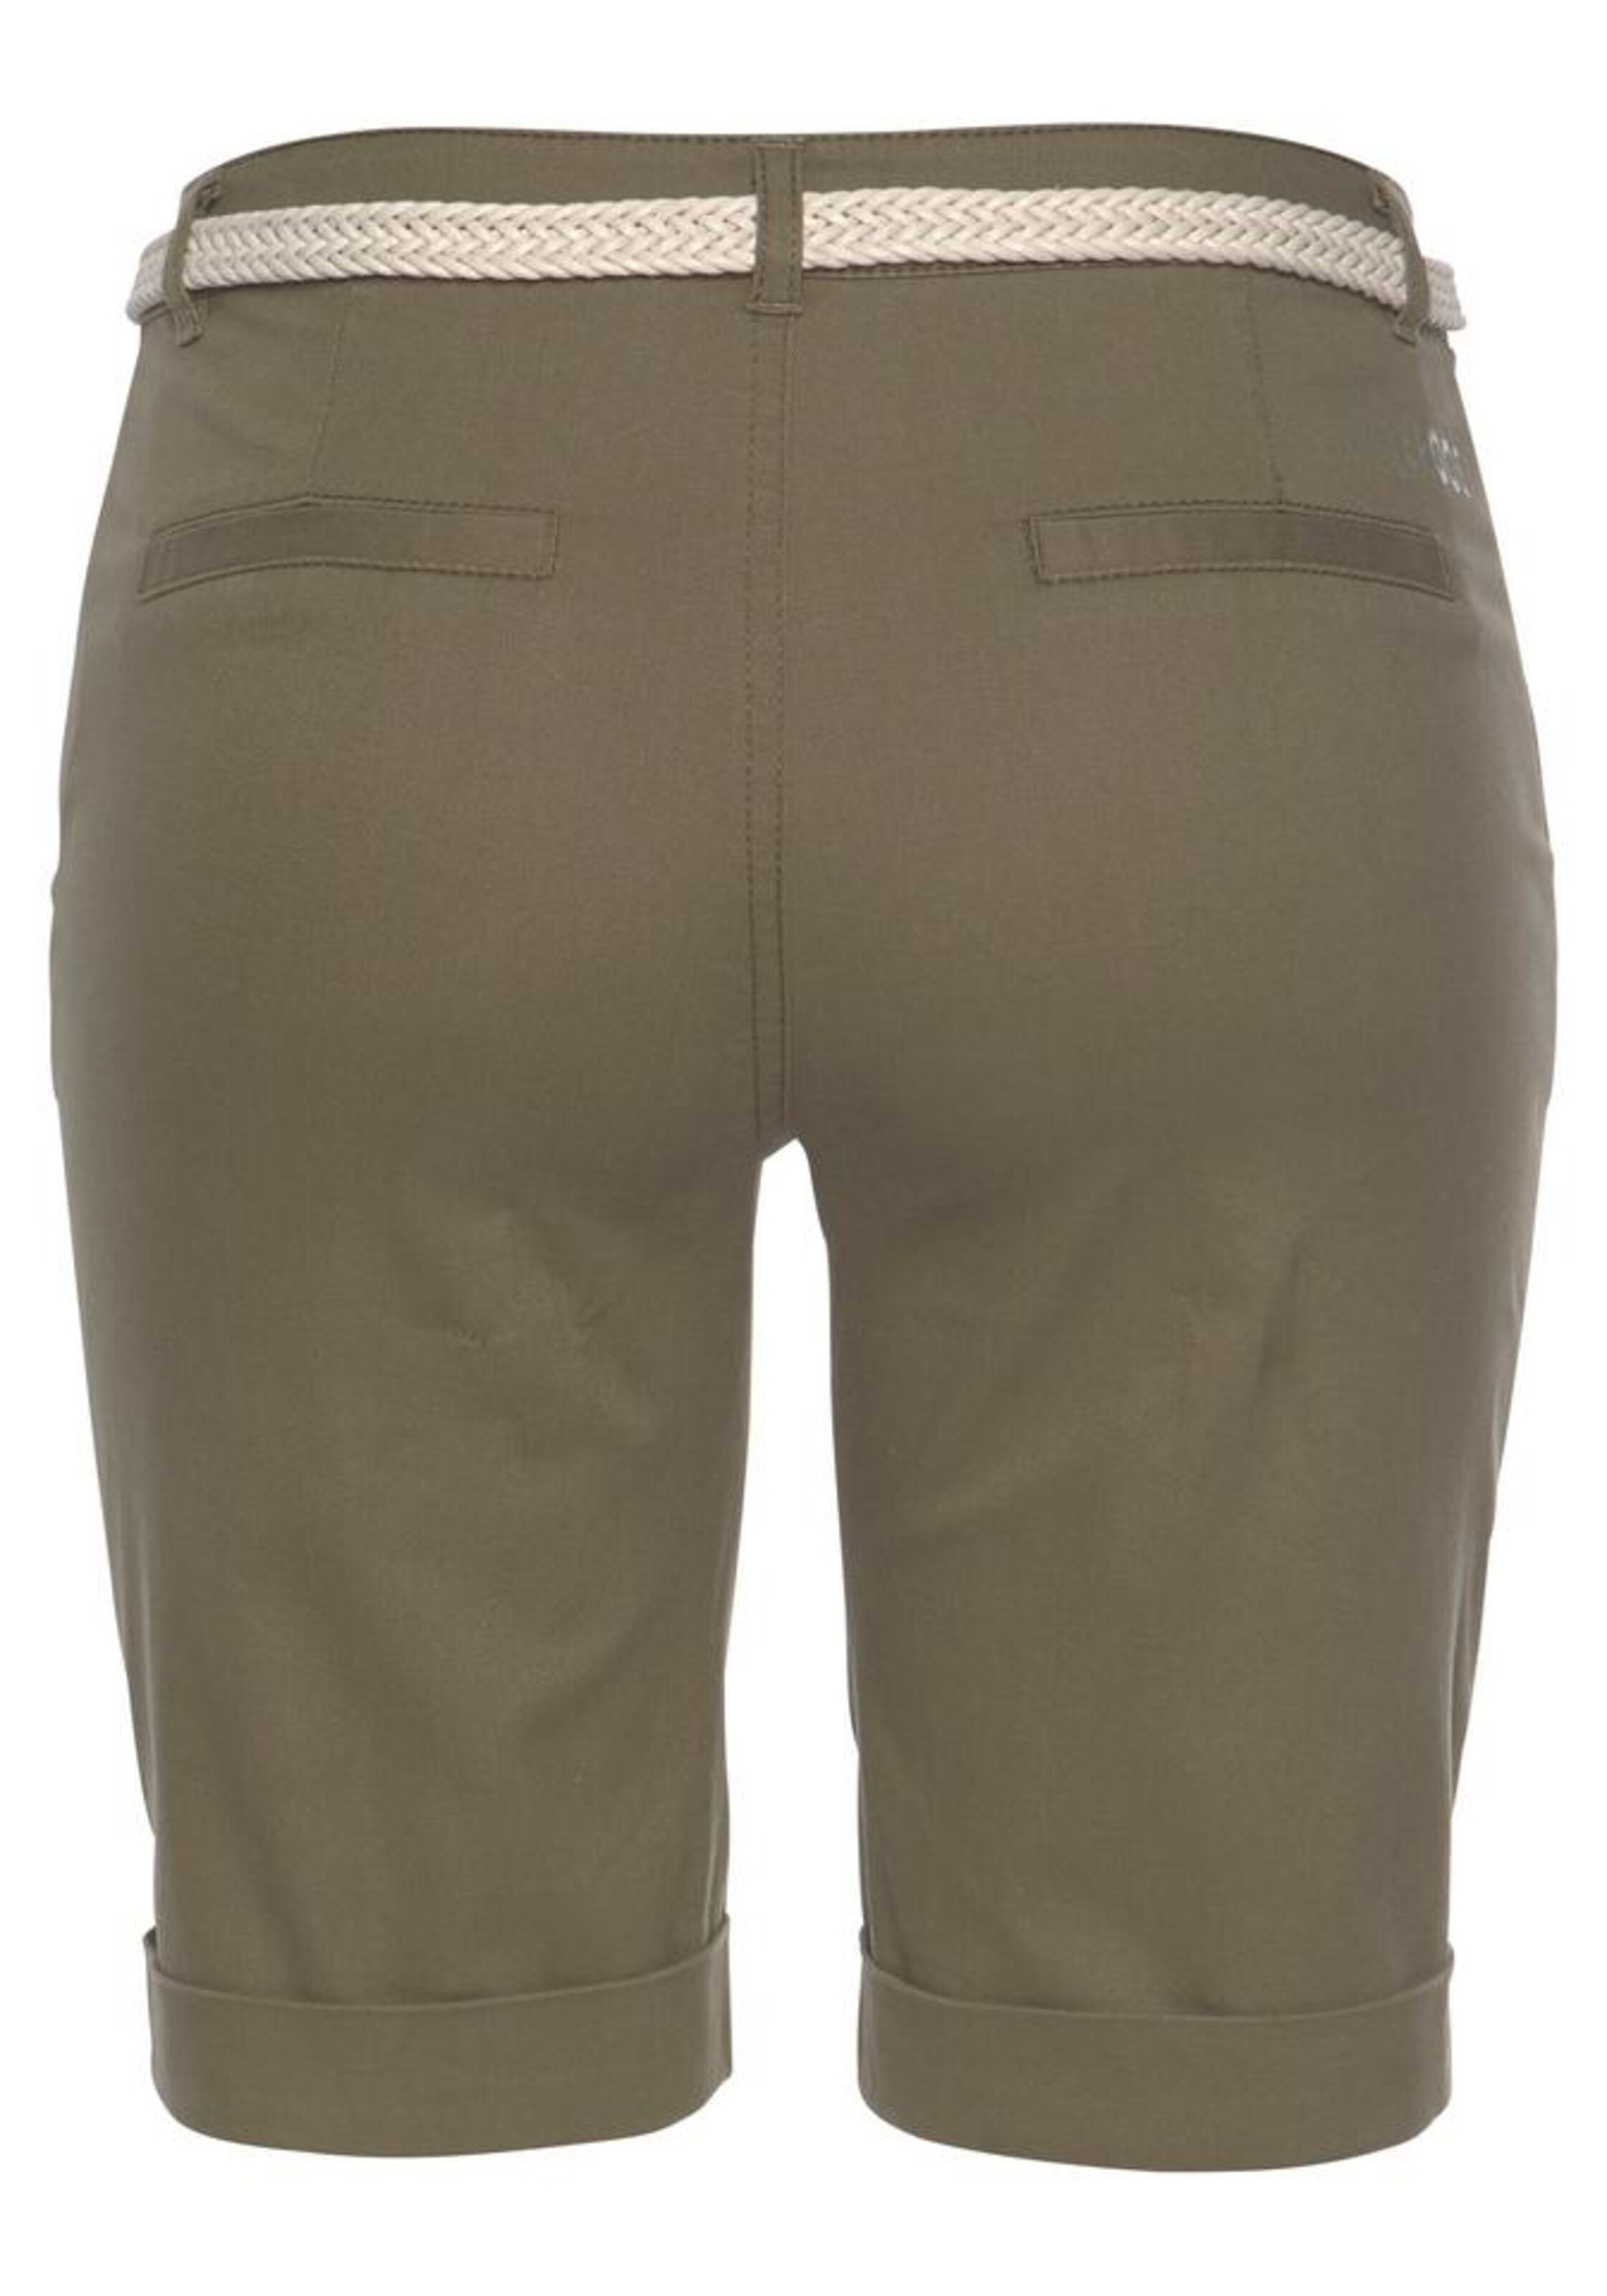 Frauen Große Größen KangaROOS Hose mit Gürtel in Khaki - PB59578